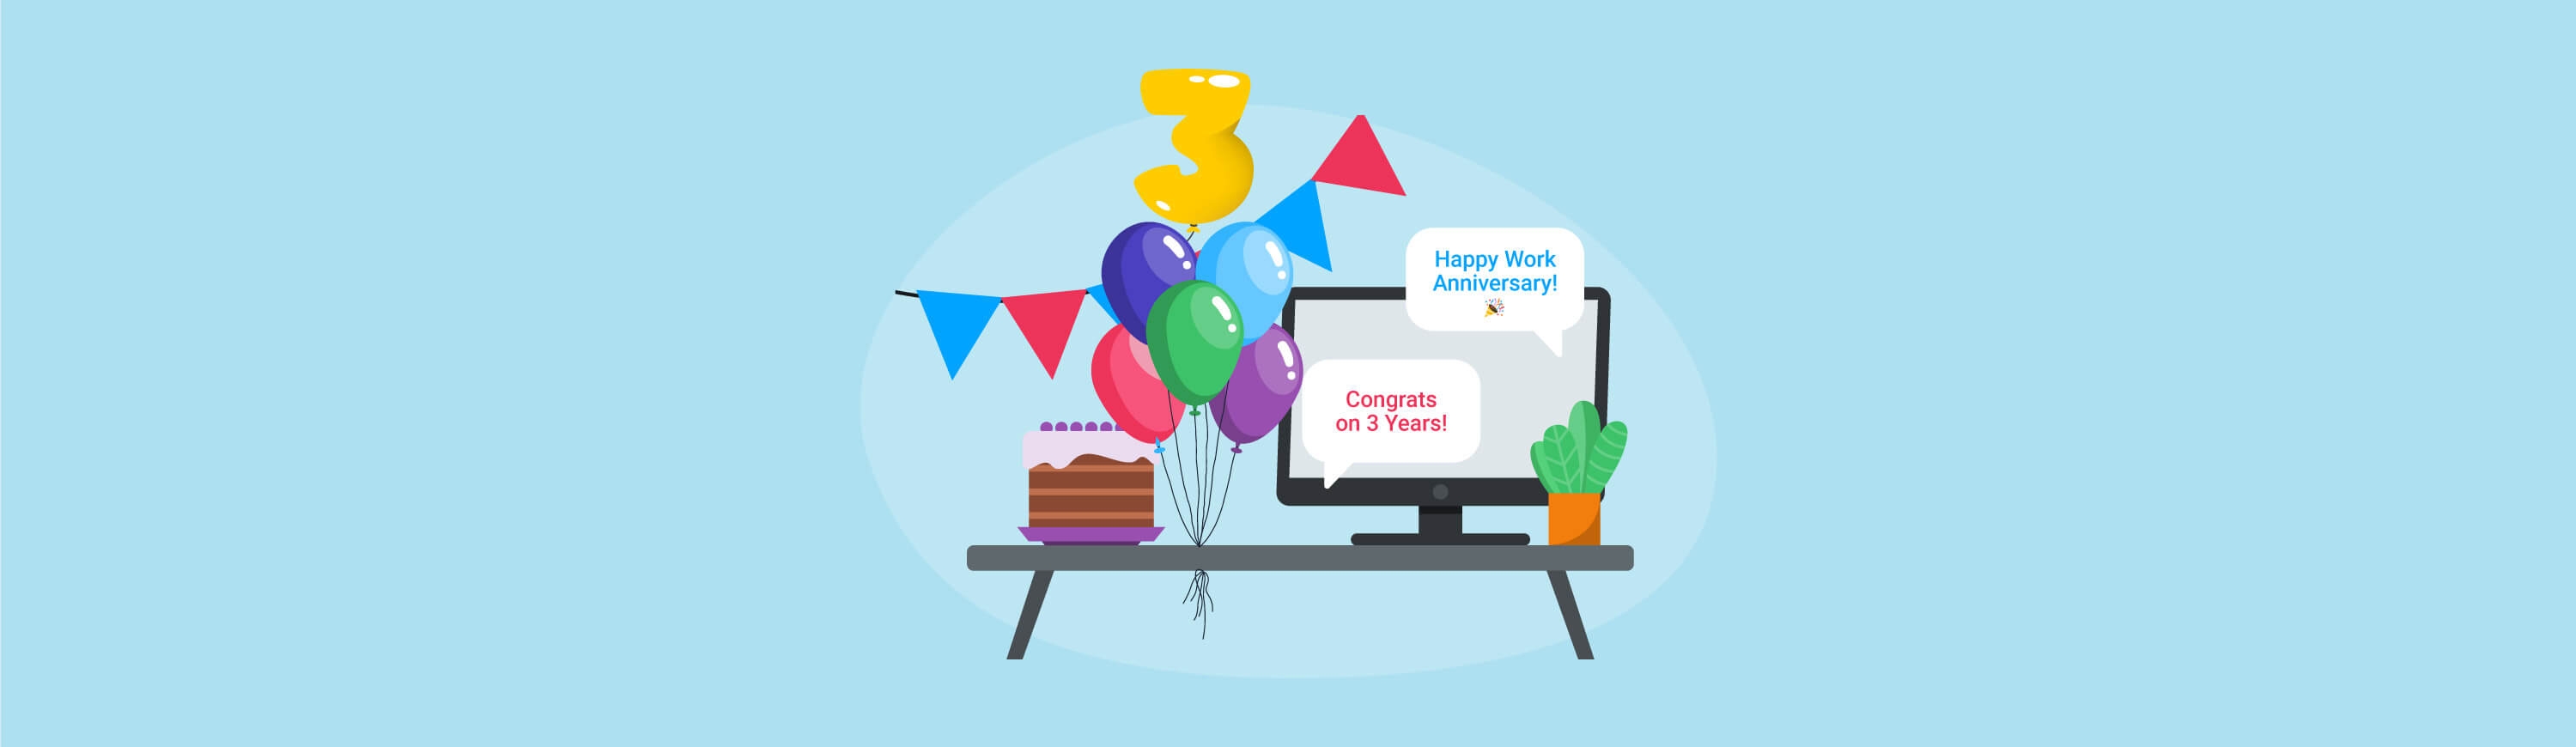 Work Anniversary Tips and Ideas | Motivosity Blog Post